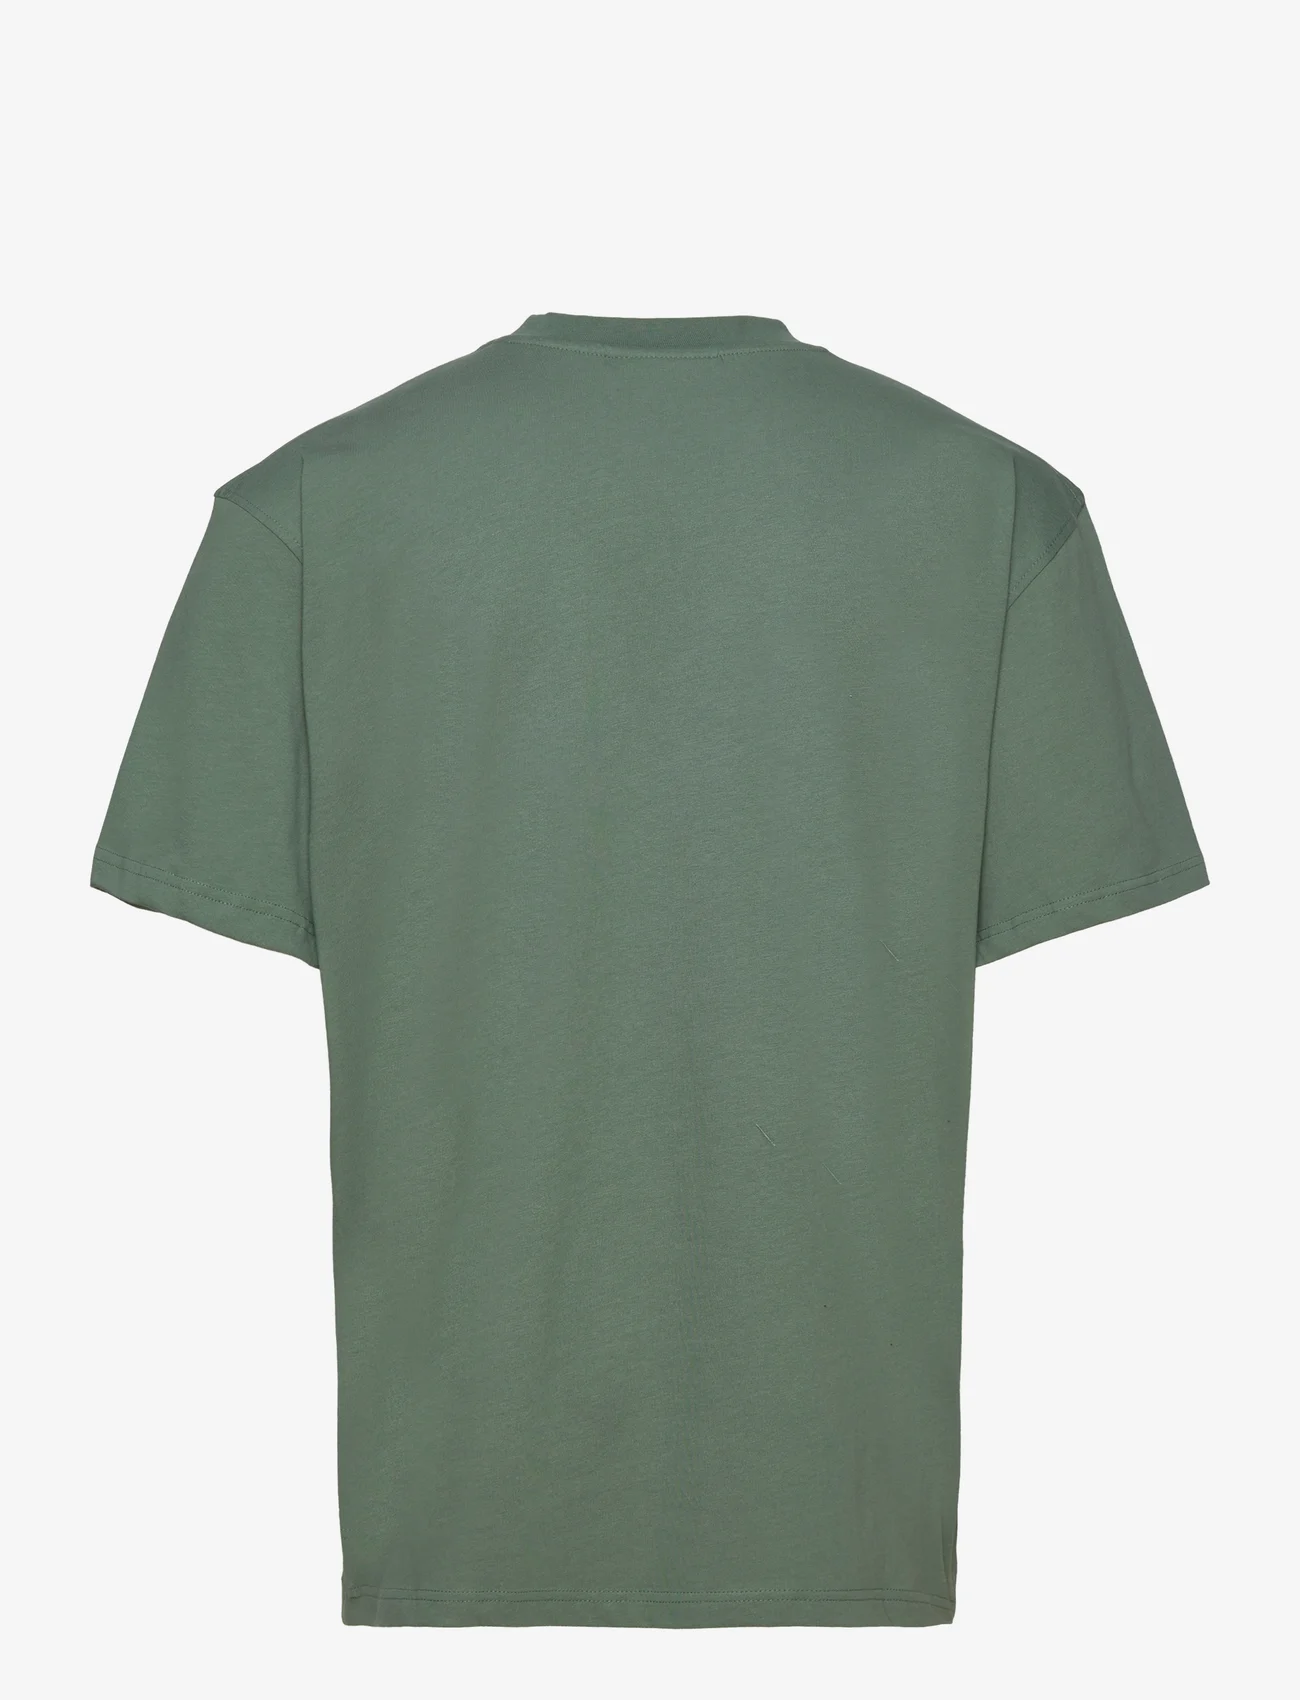 HAN Kjøbenhavn - Boxy Tee S/S Artwork - basic shirts - dusty green - 1